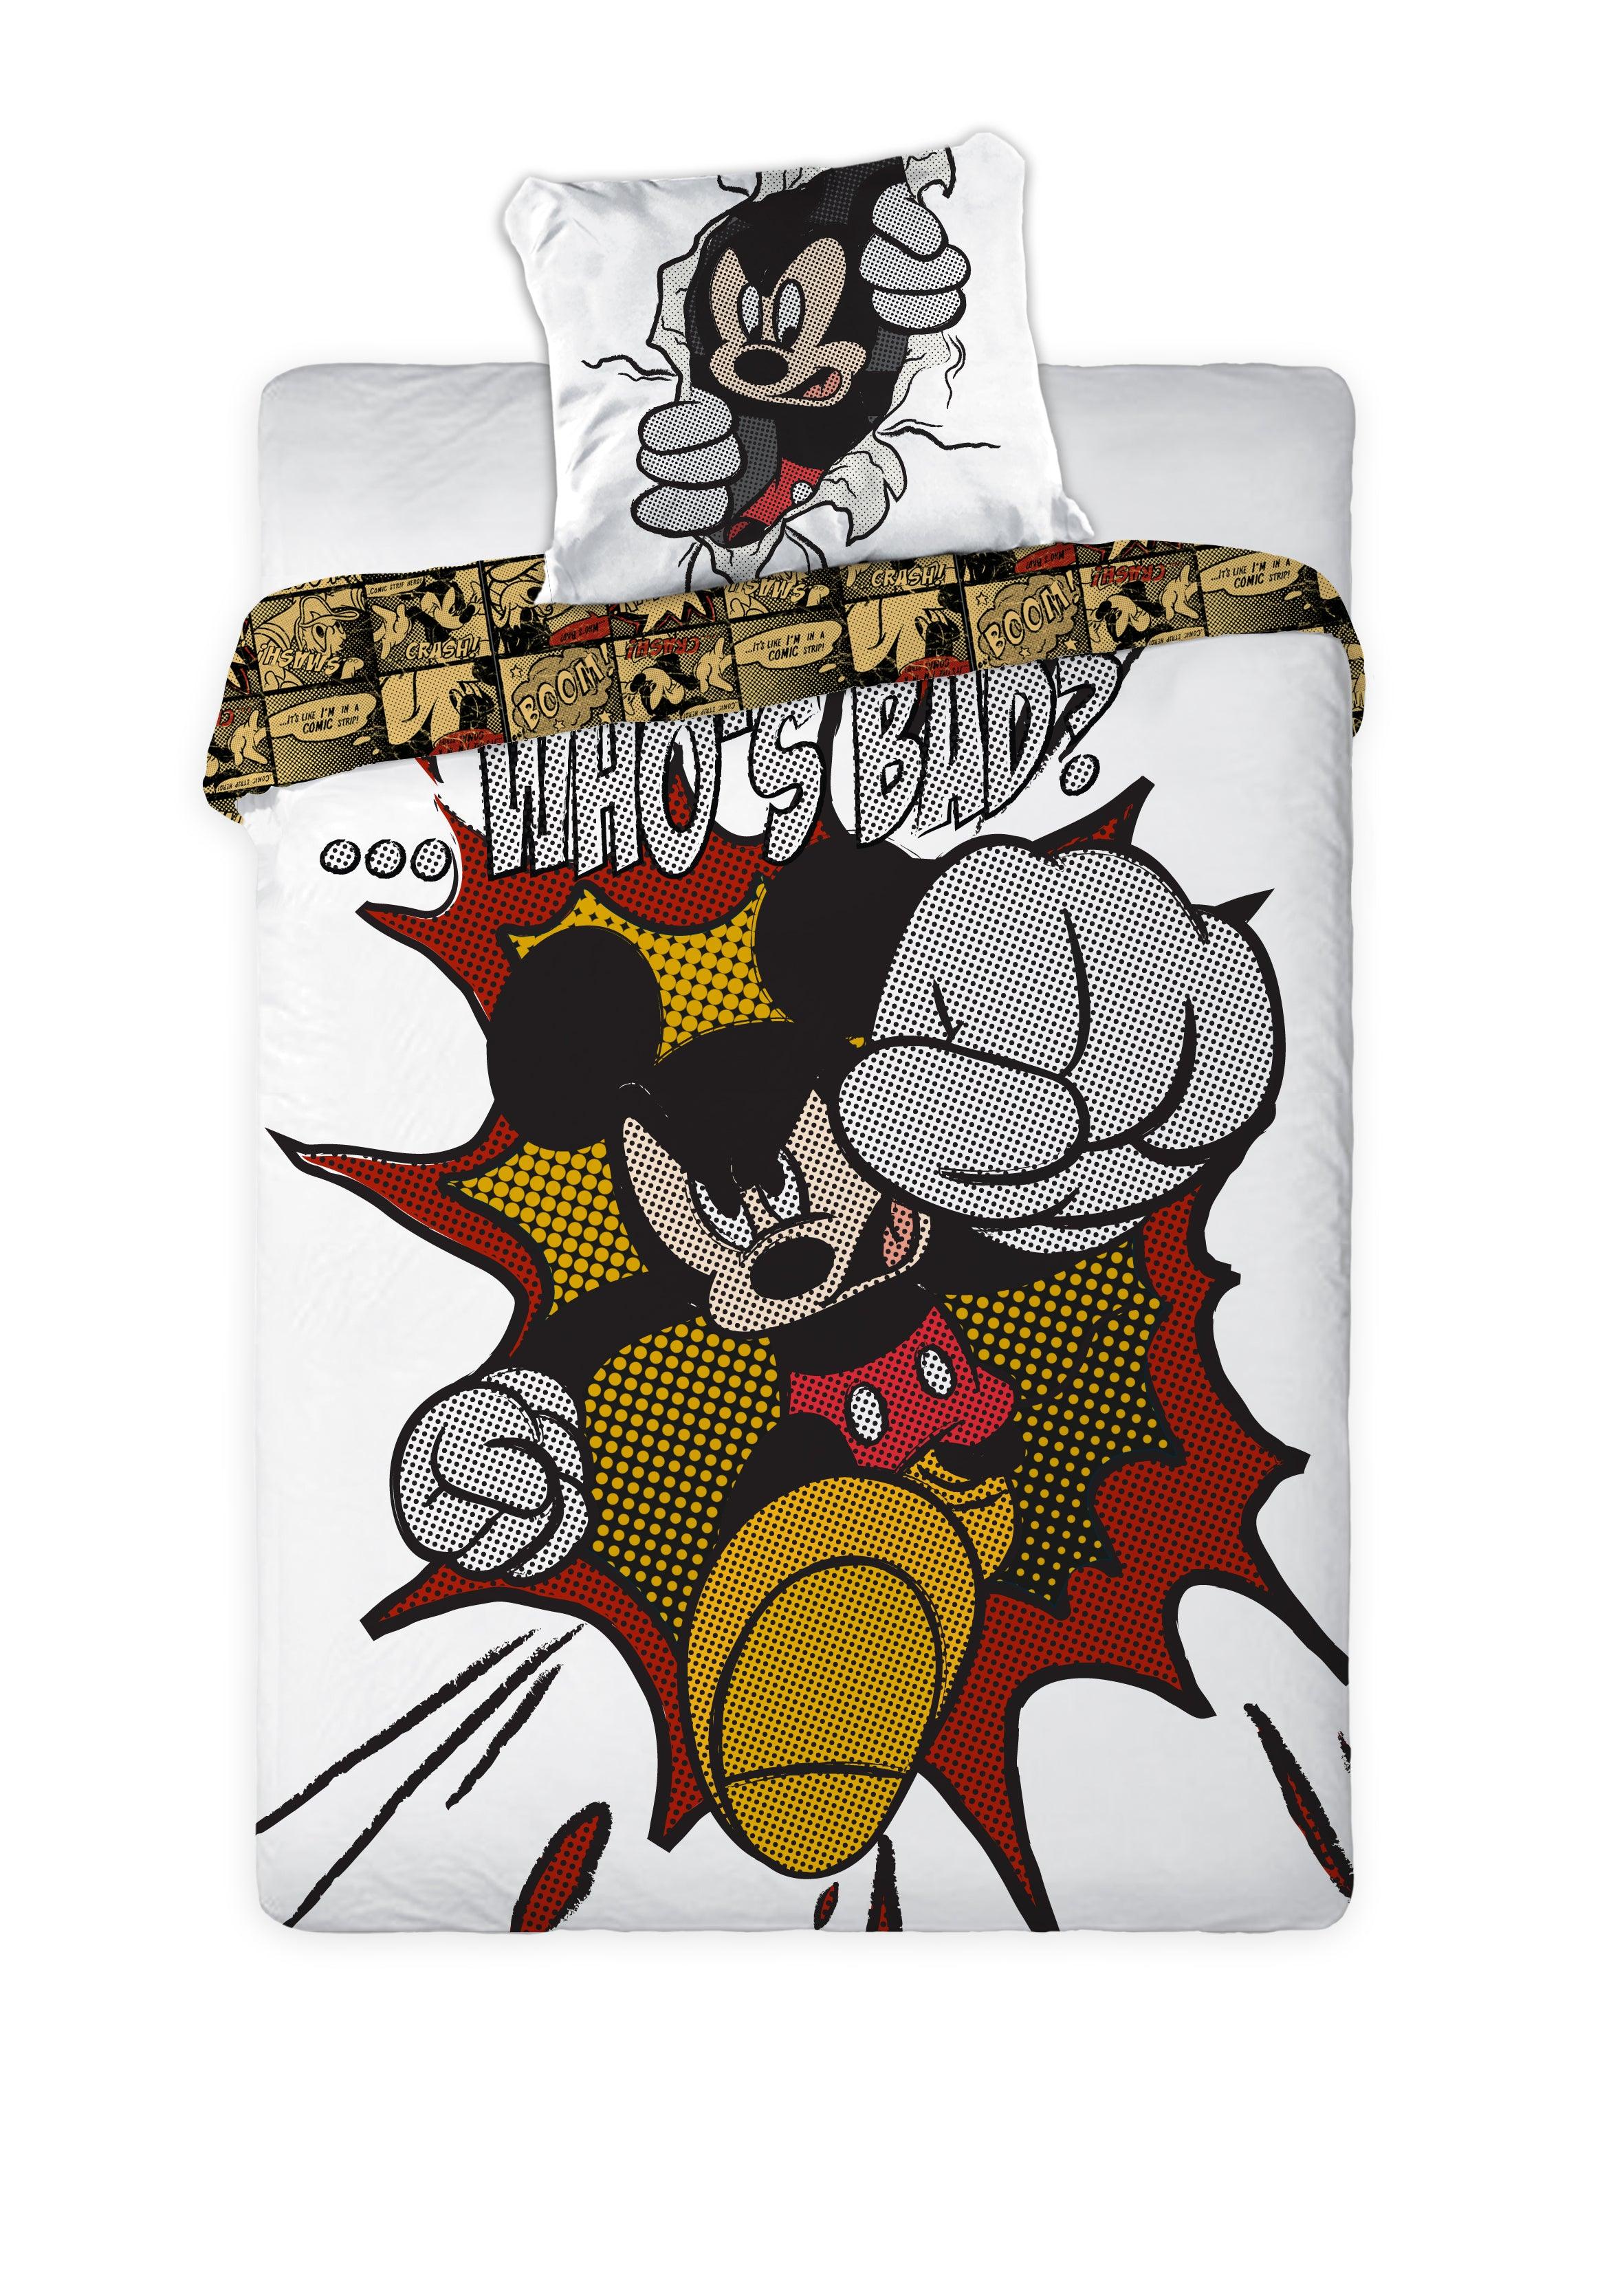 Textiel Trade - Textiel bedding quilt cover & pillow case disney mickey mouse - Mari Kali Stores Cyprus